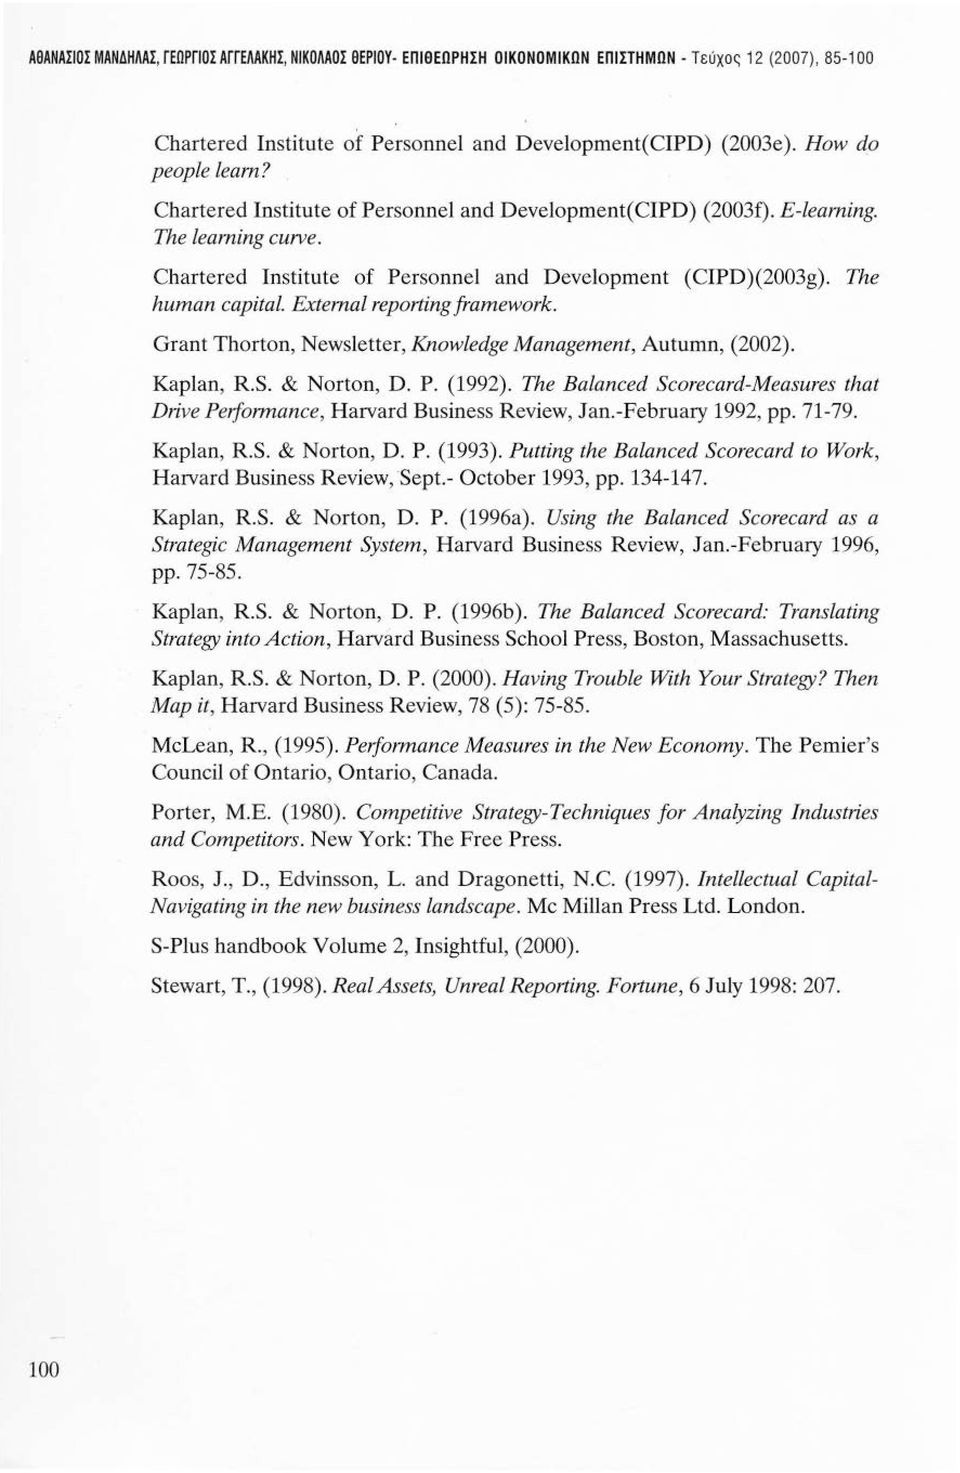 Extemal reportίng framework. Grant Thorton, Newsletter, Κnowledge Management, Autumn, (2002). Kaplan, R.S. & Norton, D. Ρ. (1992).